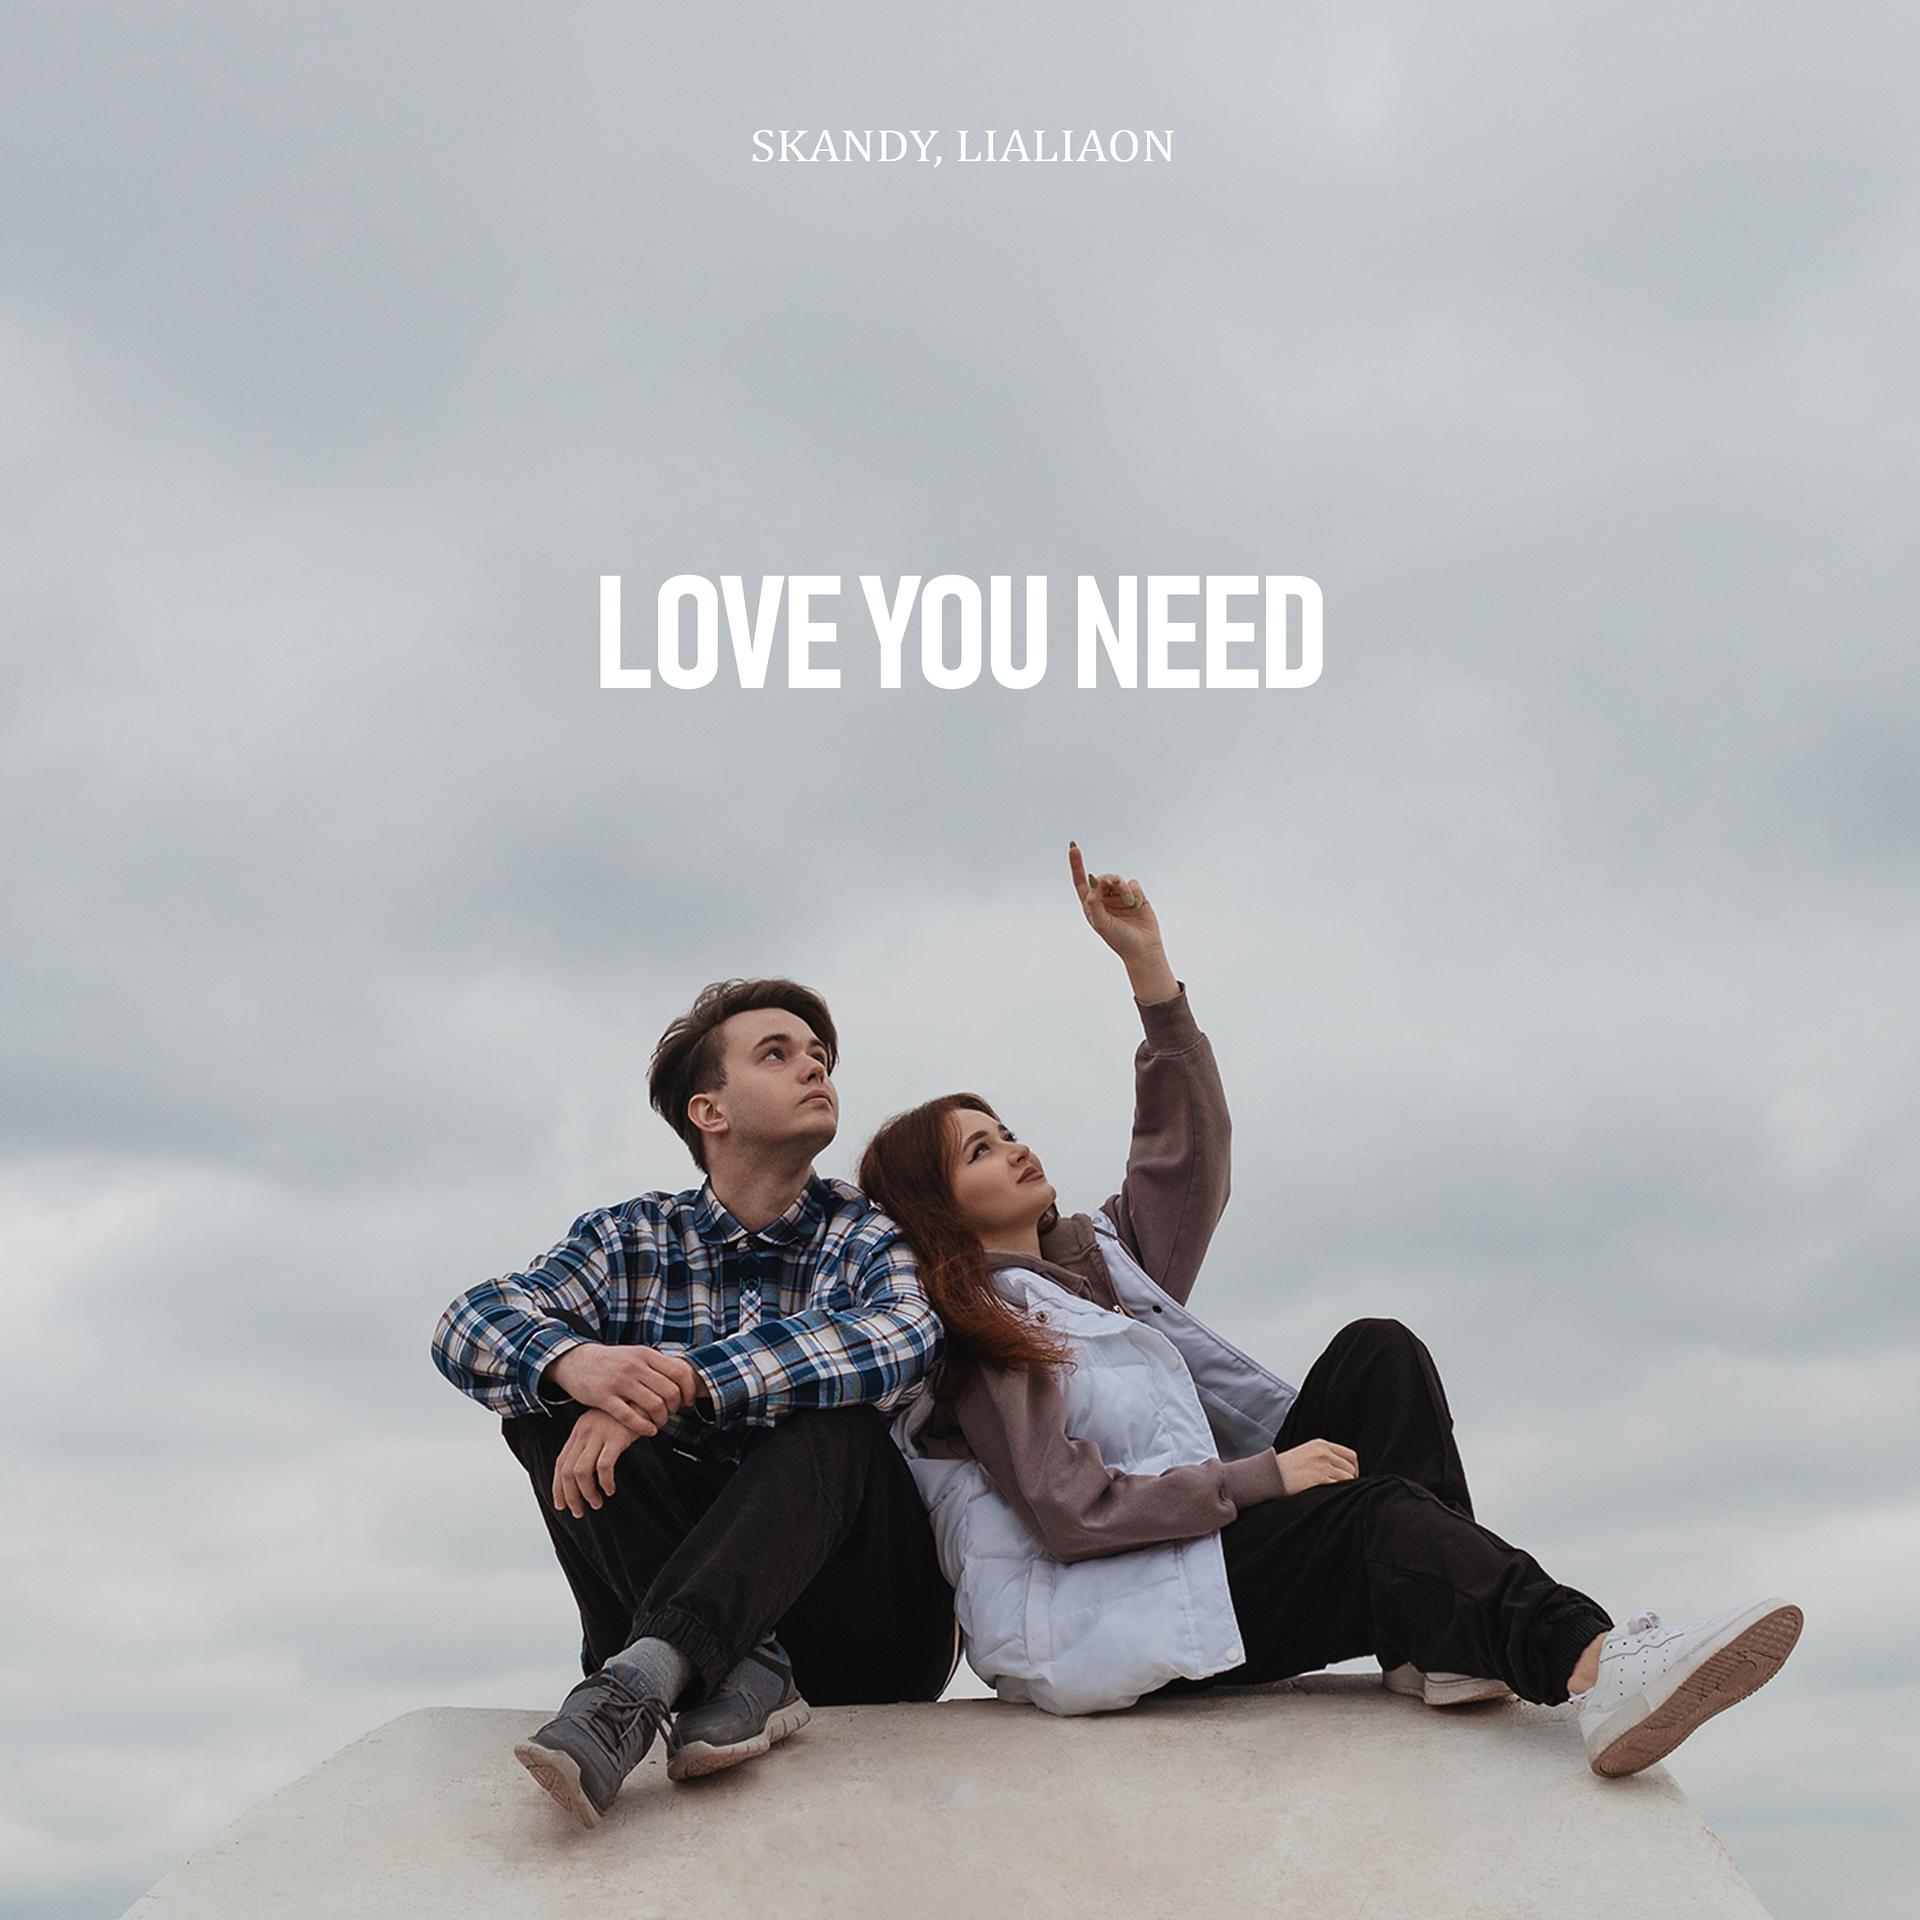 Постер к треку Skandy, lialiaon - Love You Need